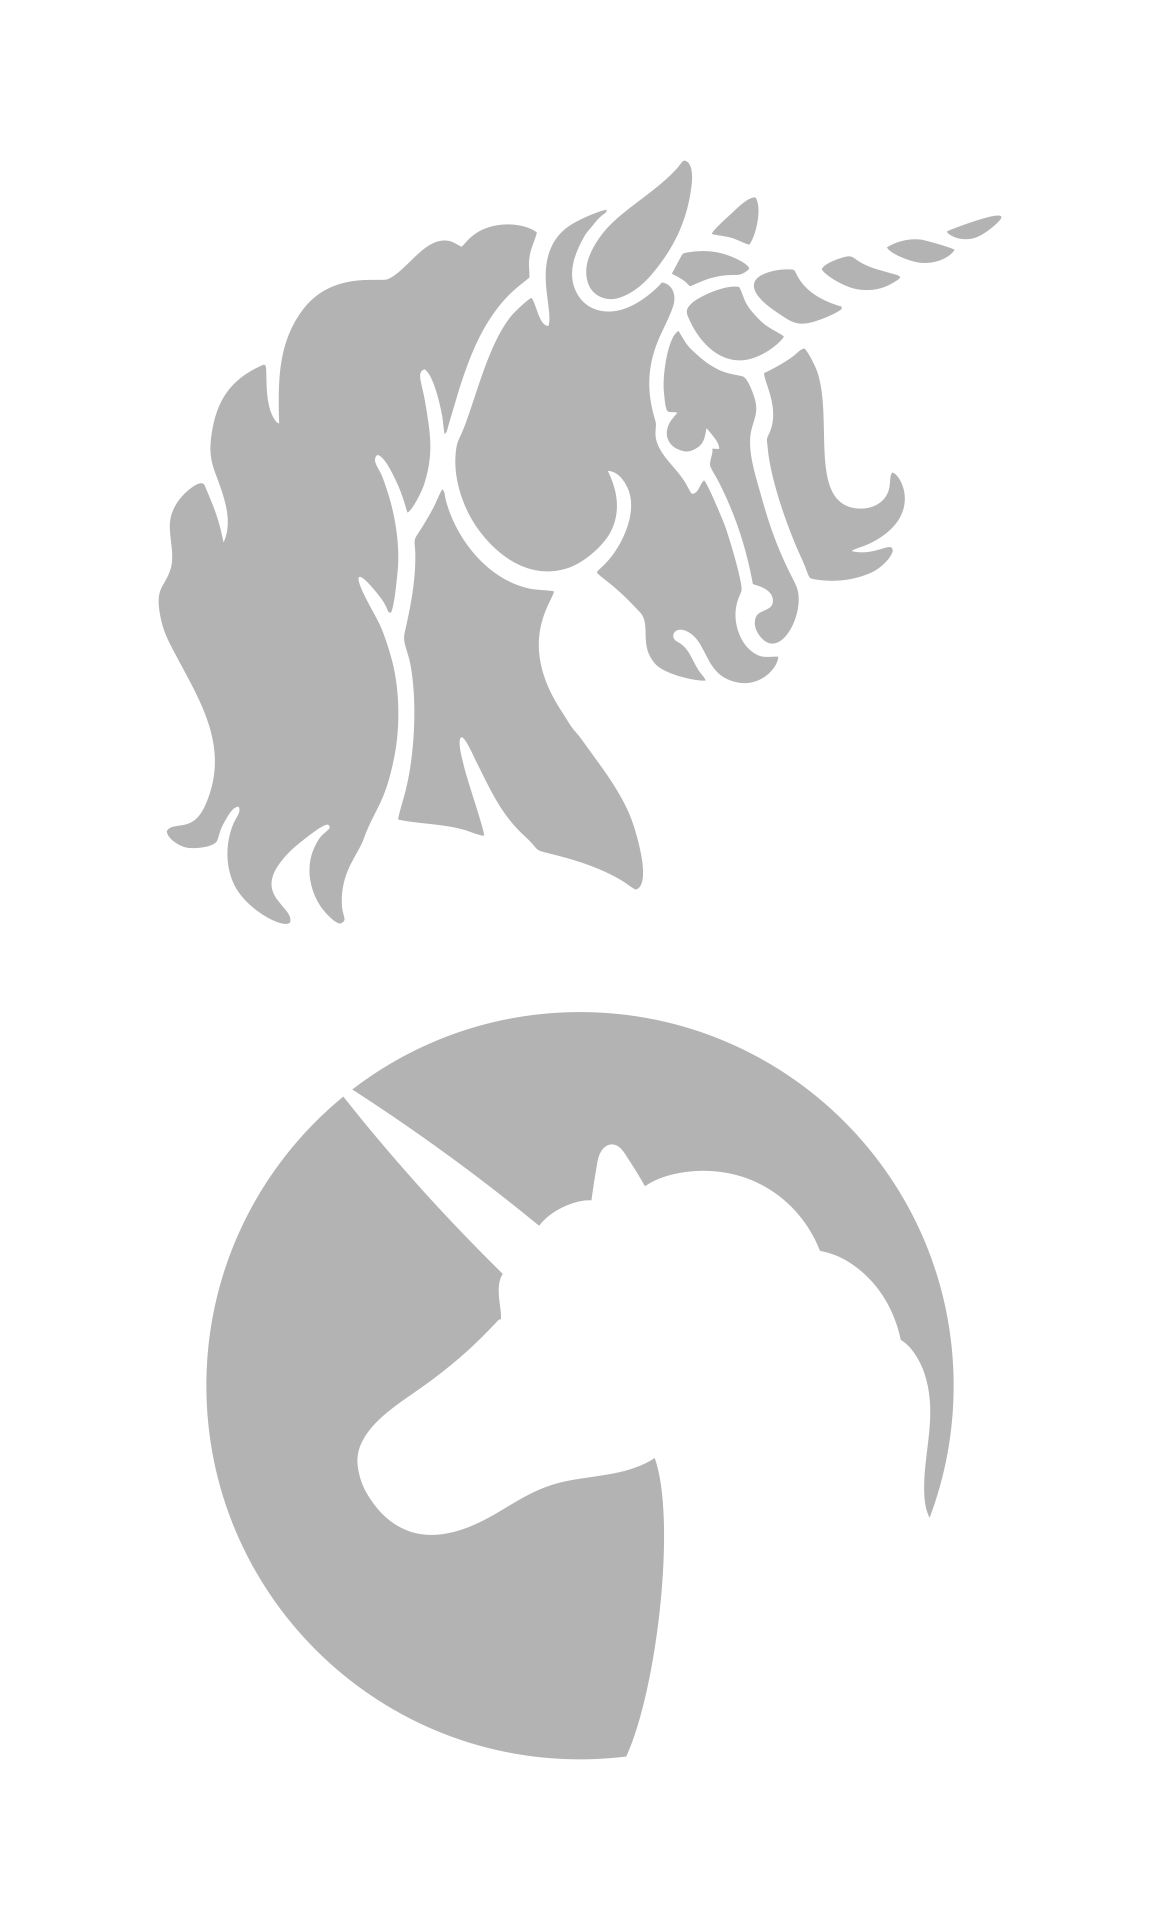 10 Best Unicorn Stencils Free Printable PDF for Free at Printablee